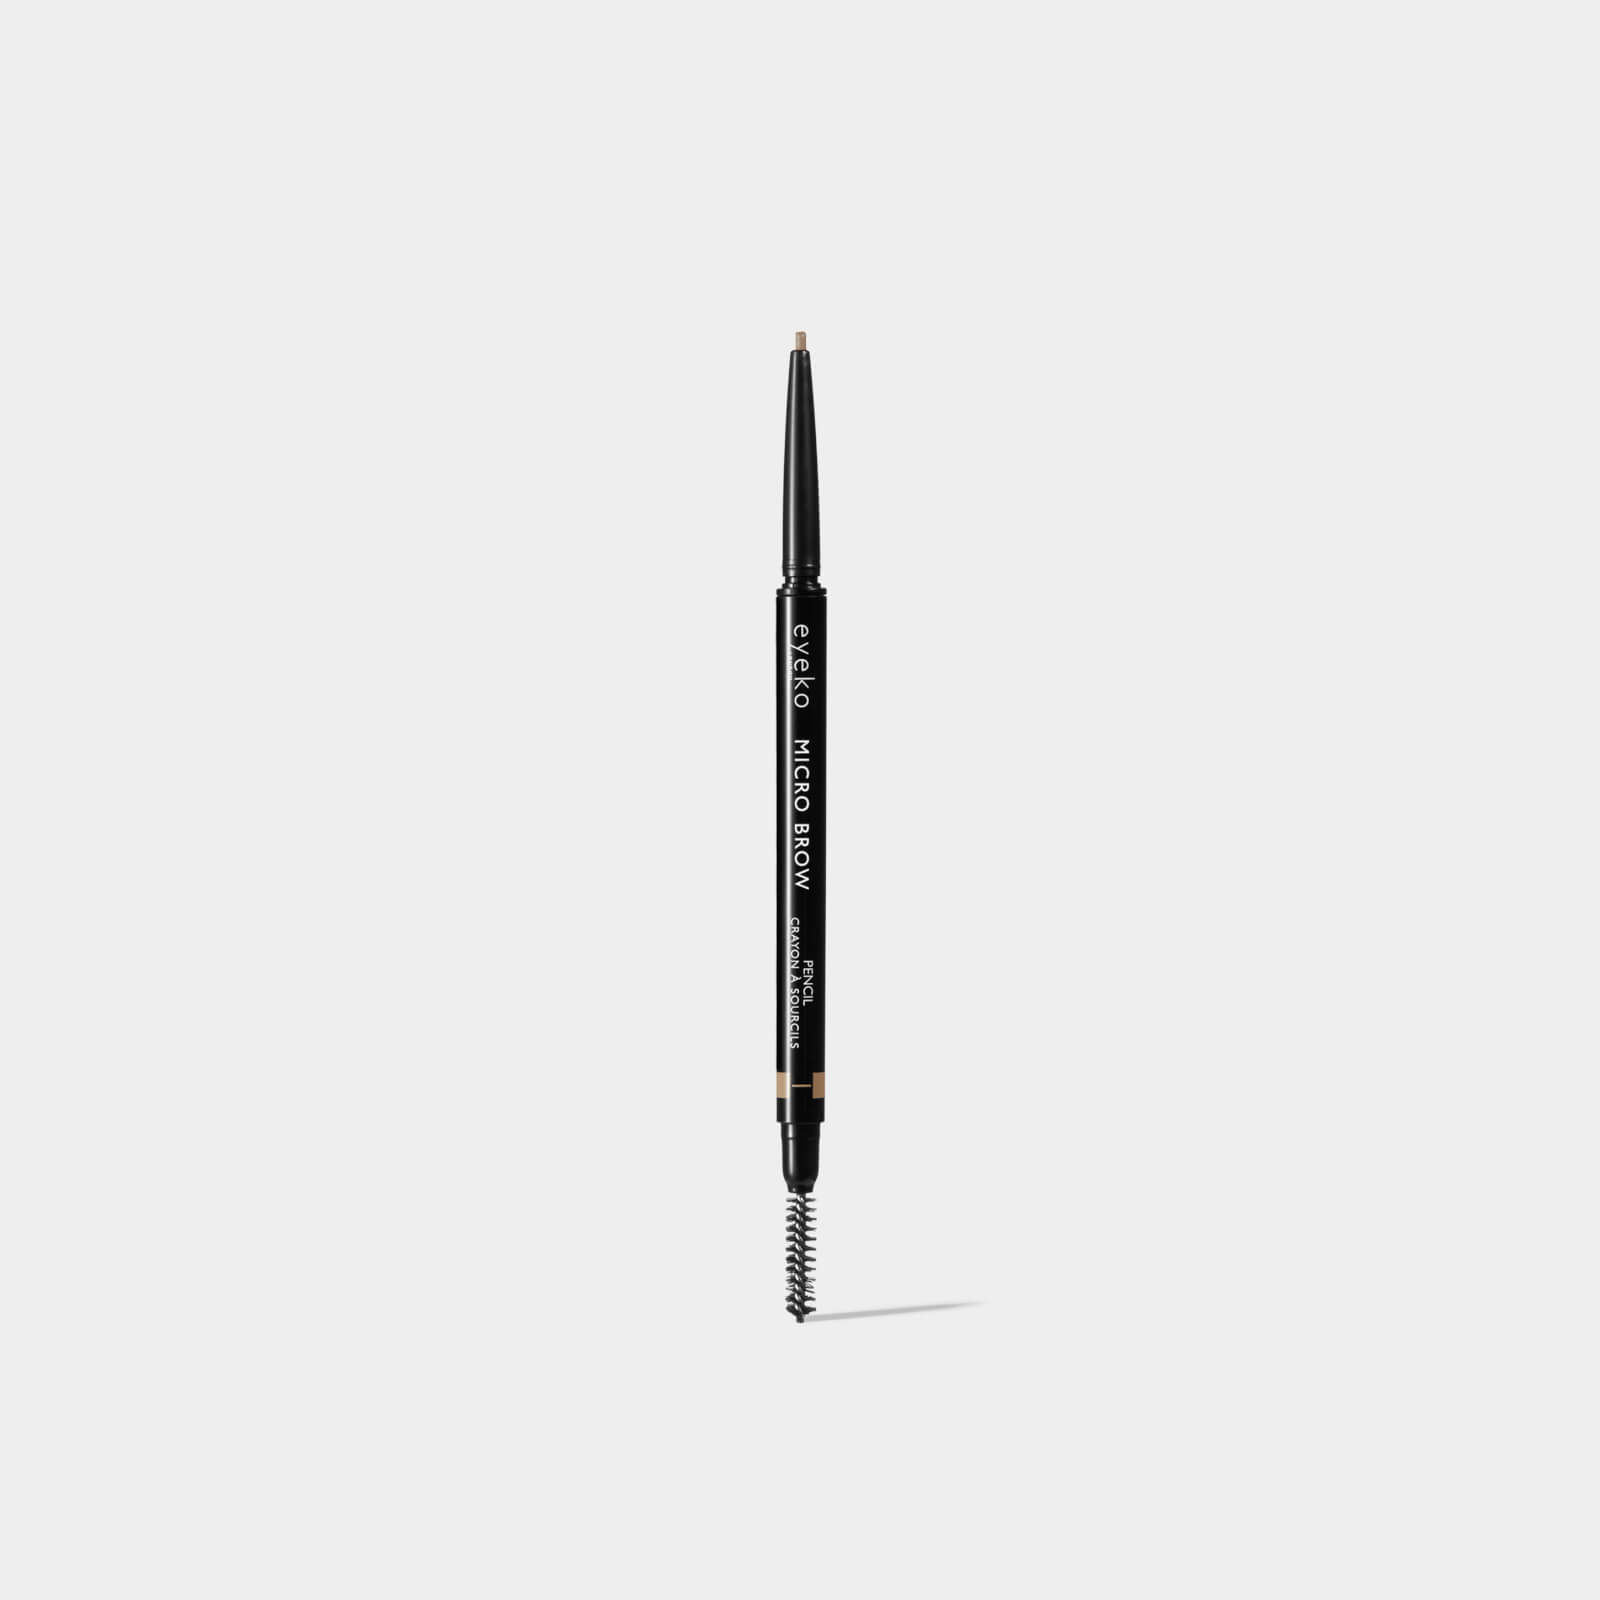 Eyeko Micro Brow Precision Pencil 2g (Various Shades) - 1 - Ash Blonde